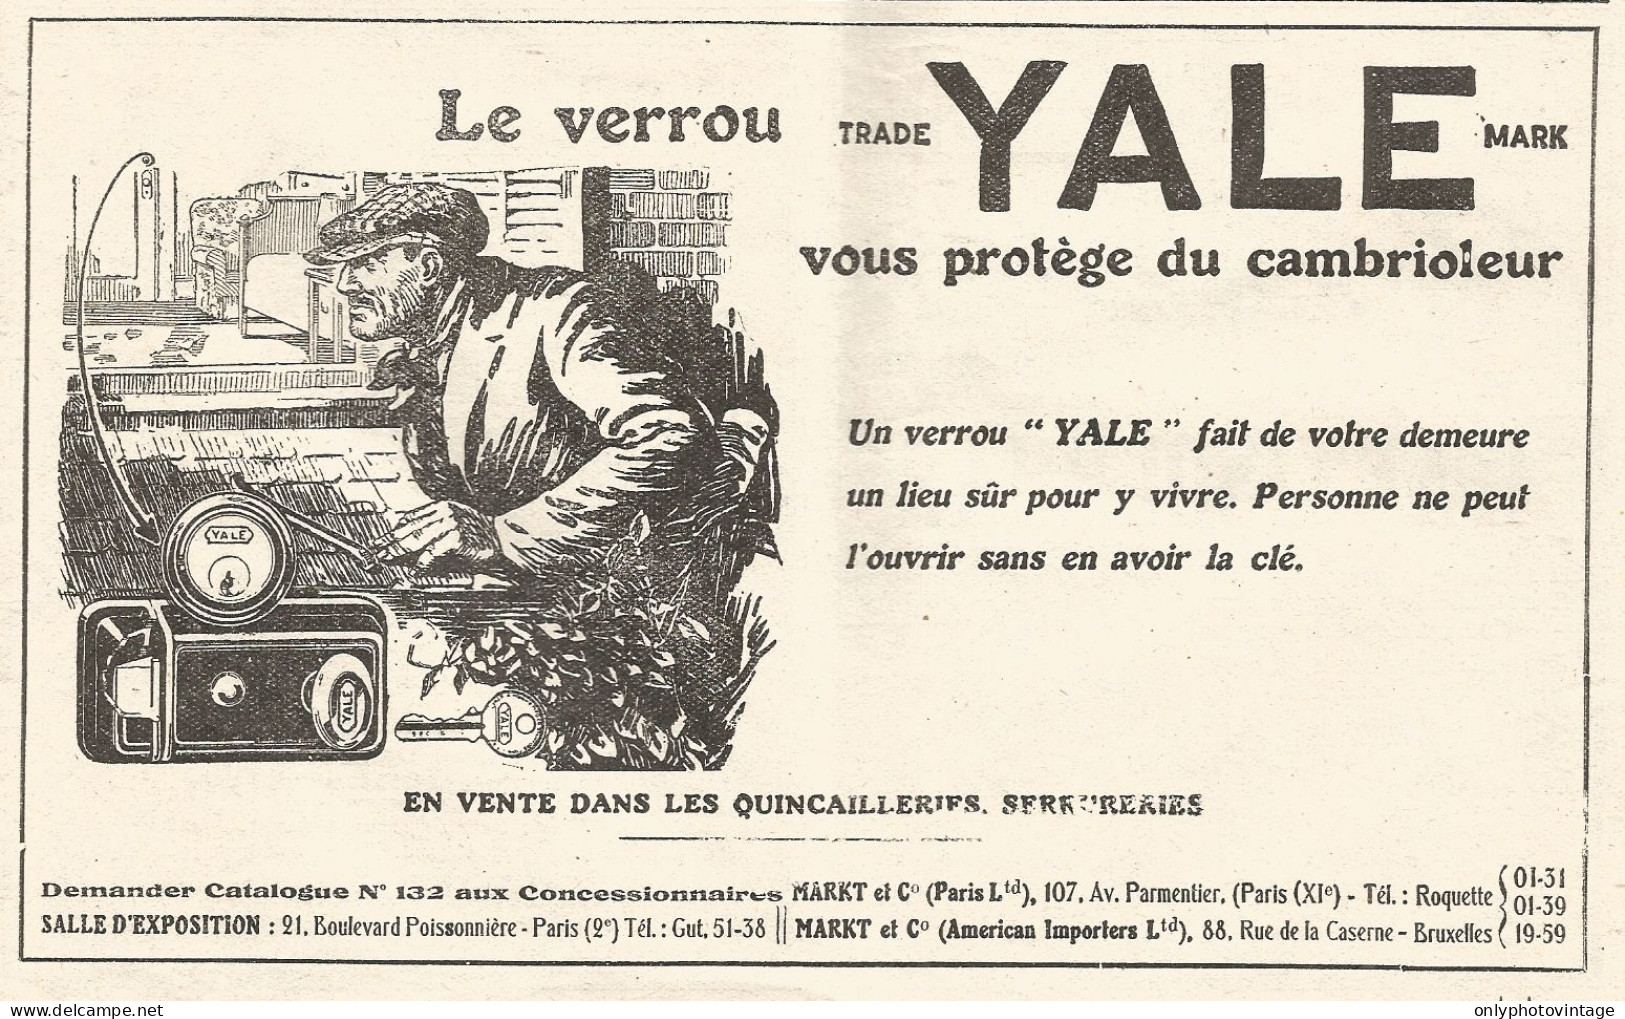 Serrature YALE - Illustrazione - Pubblicitï¿½ Del 1926 - Old Advertising - Advertising